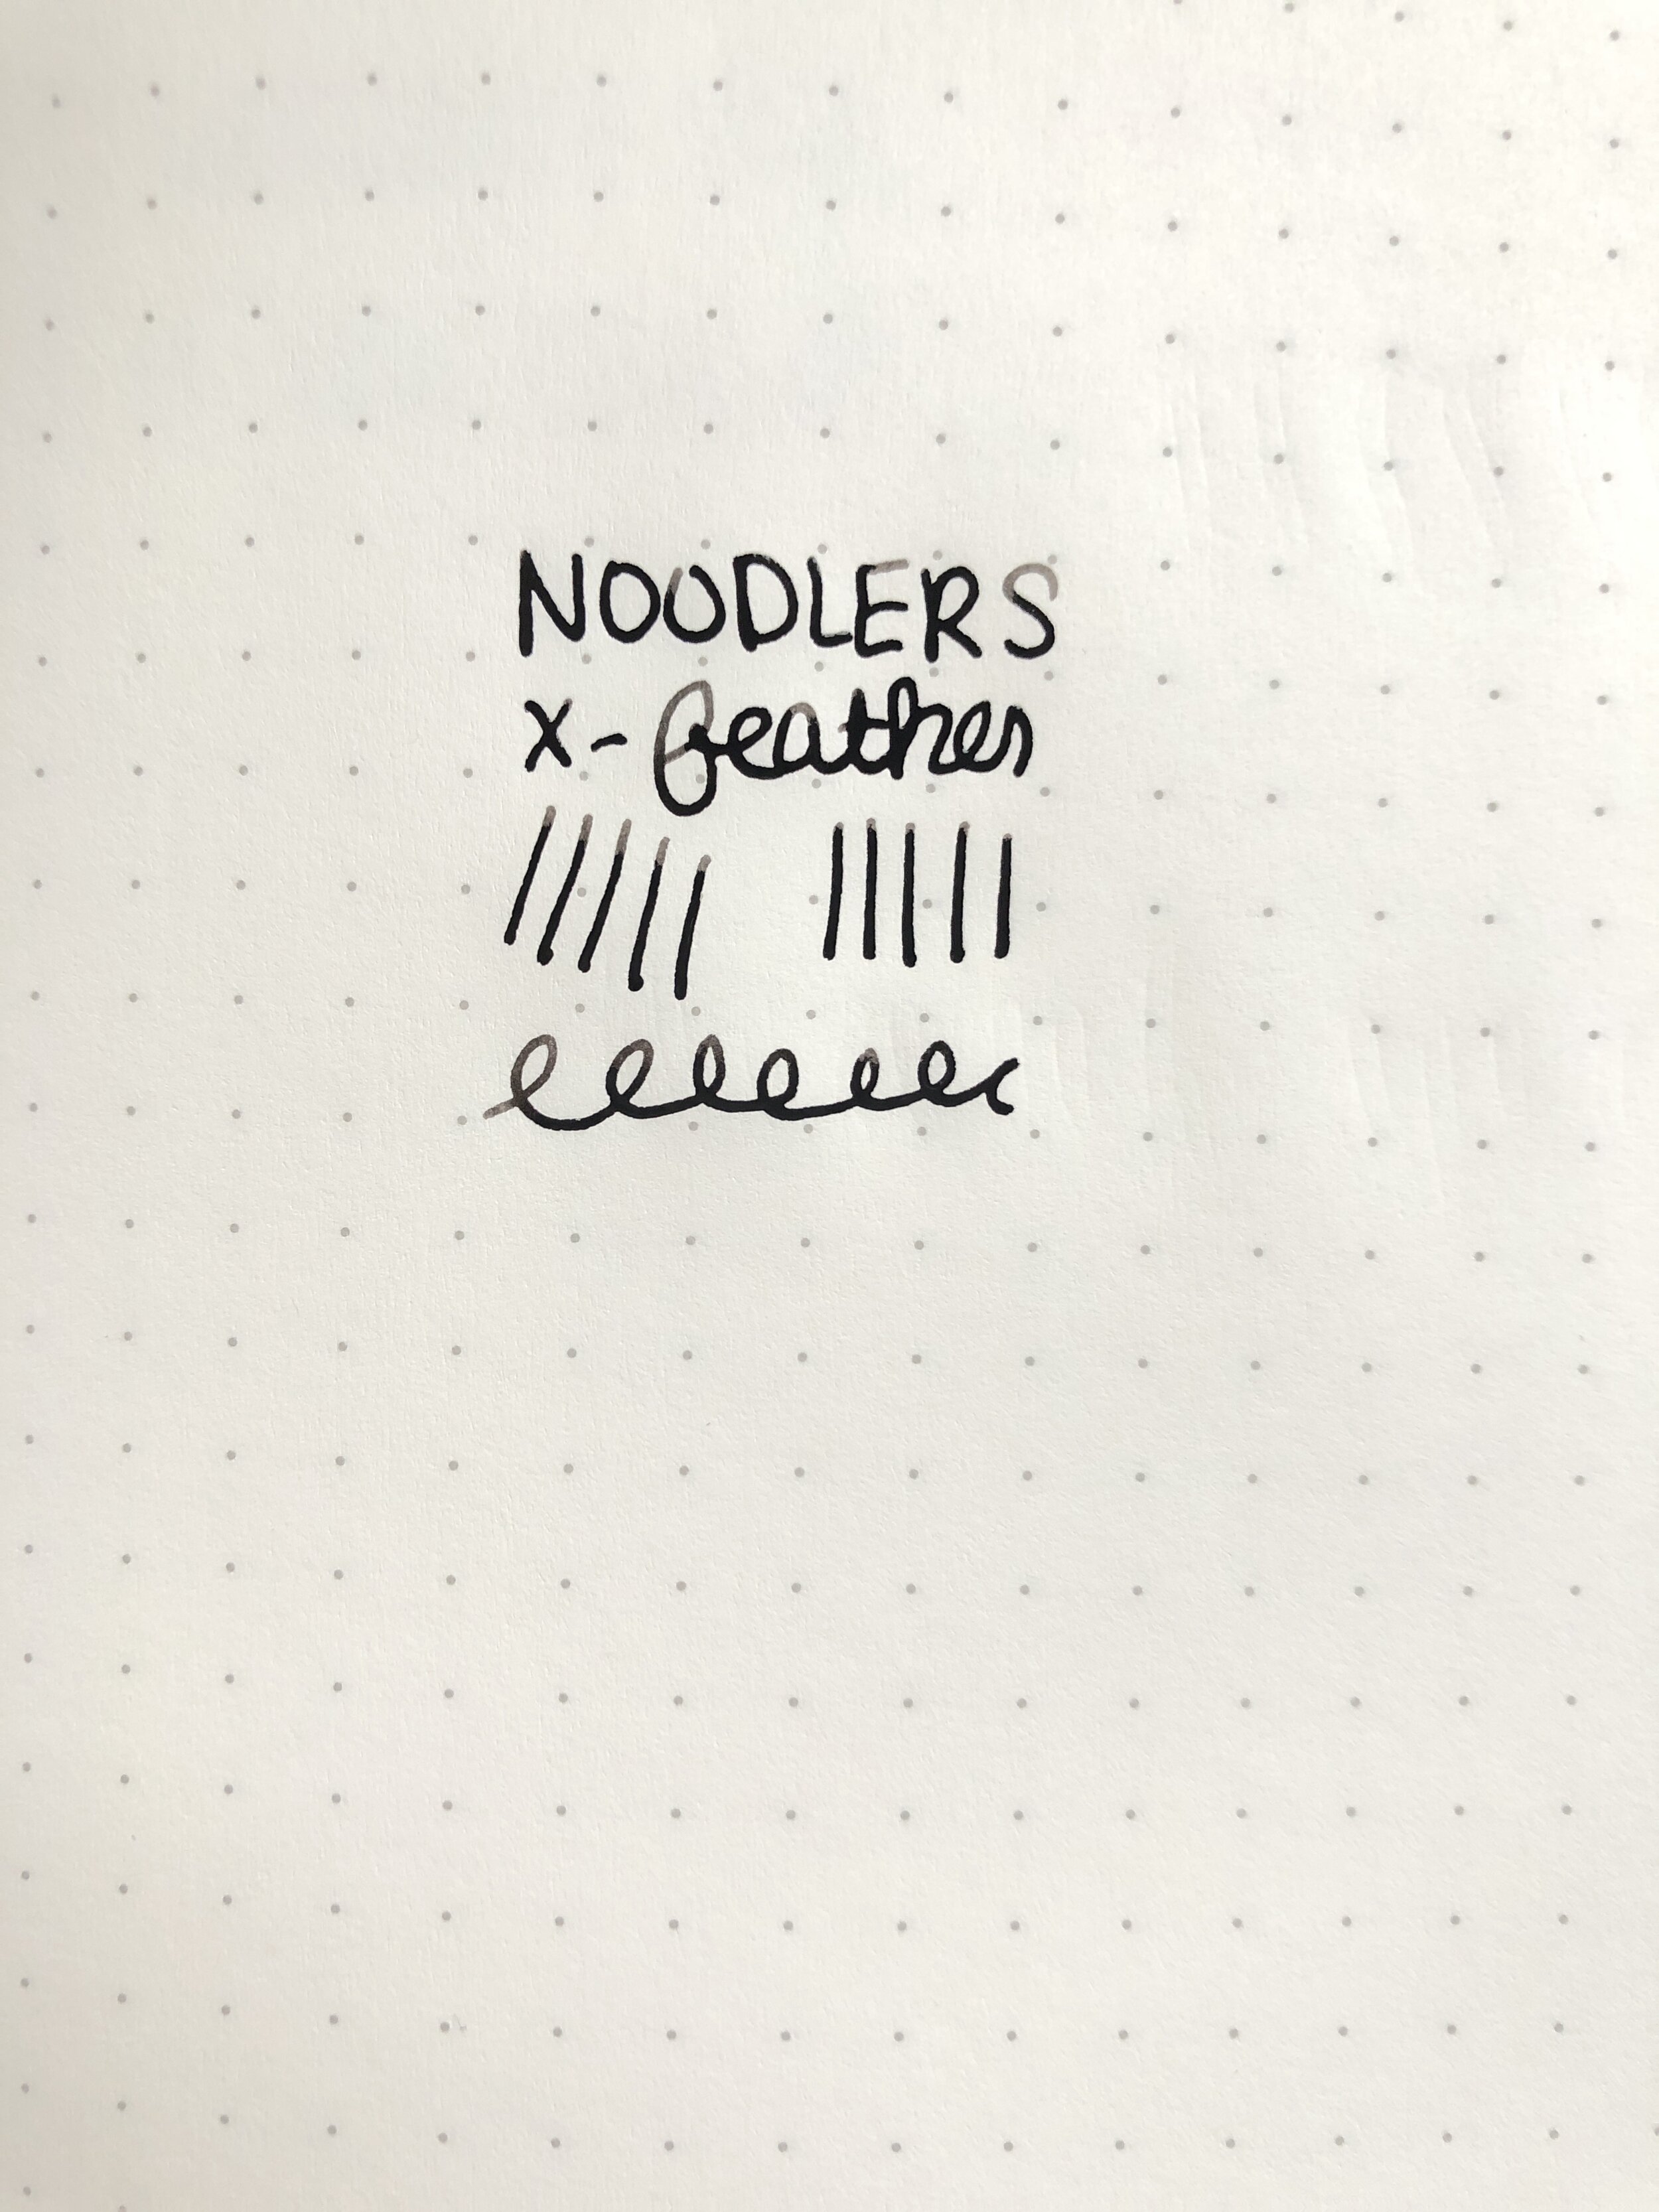 Noodler's X-Feather Black Fountain Pen Ink – Fountain Pen Revolution